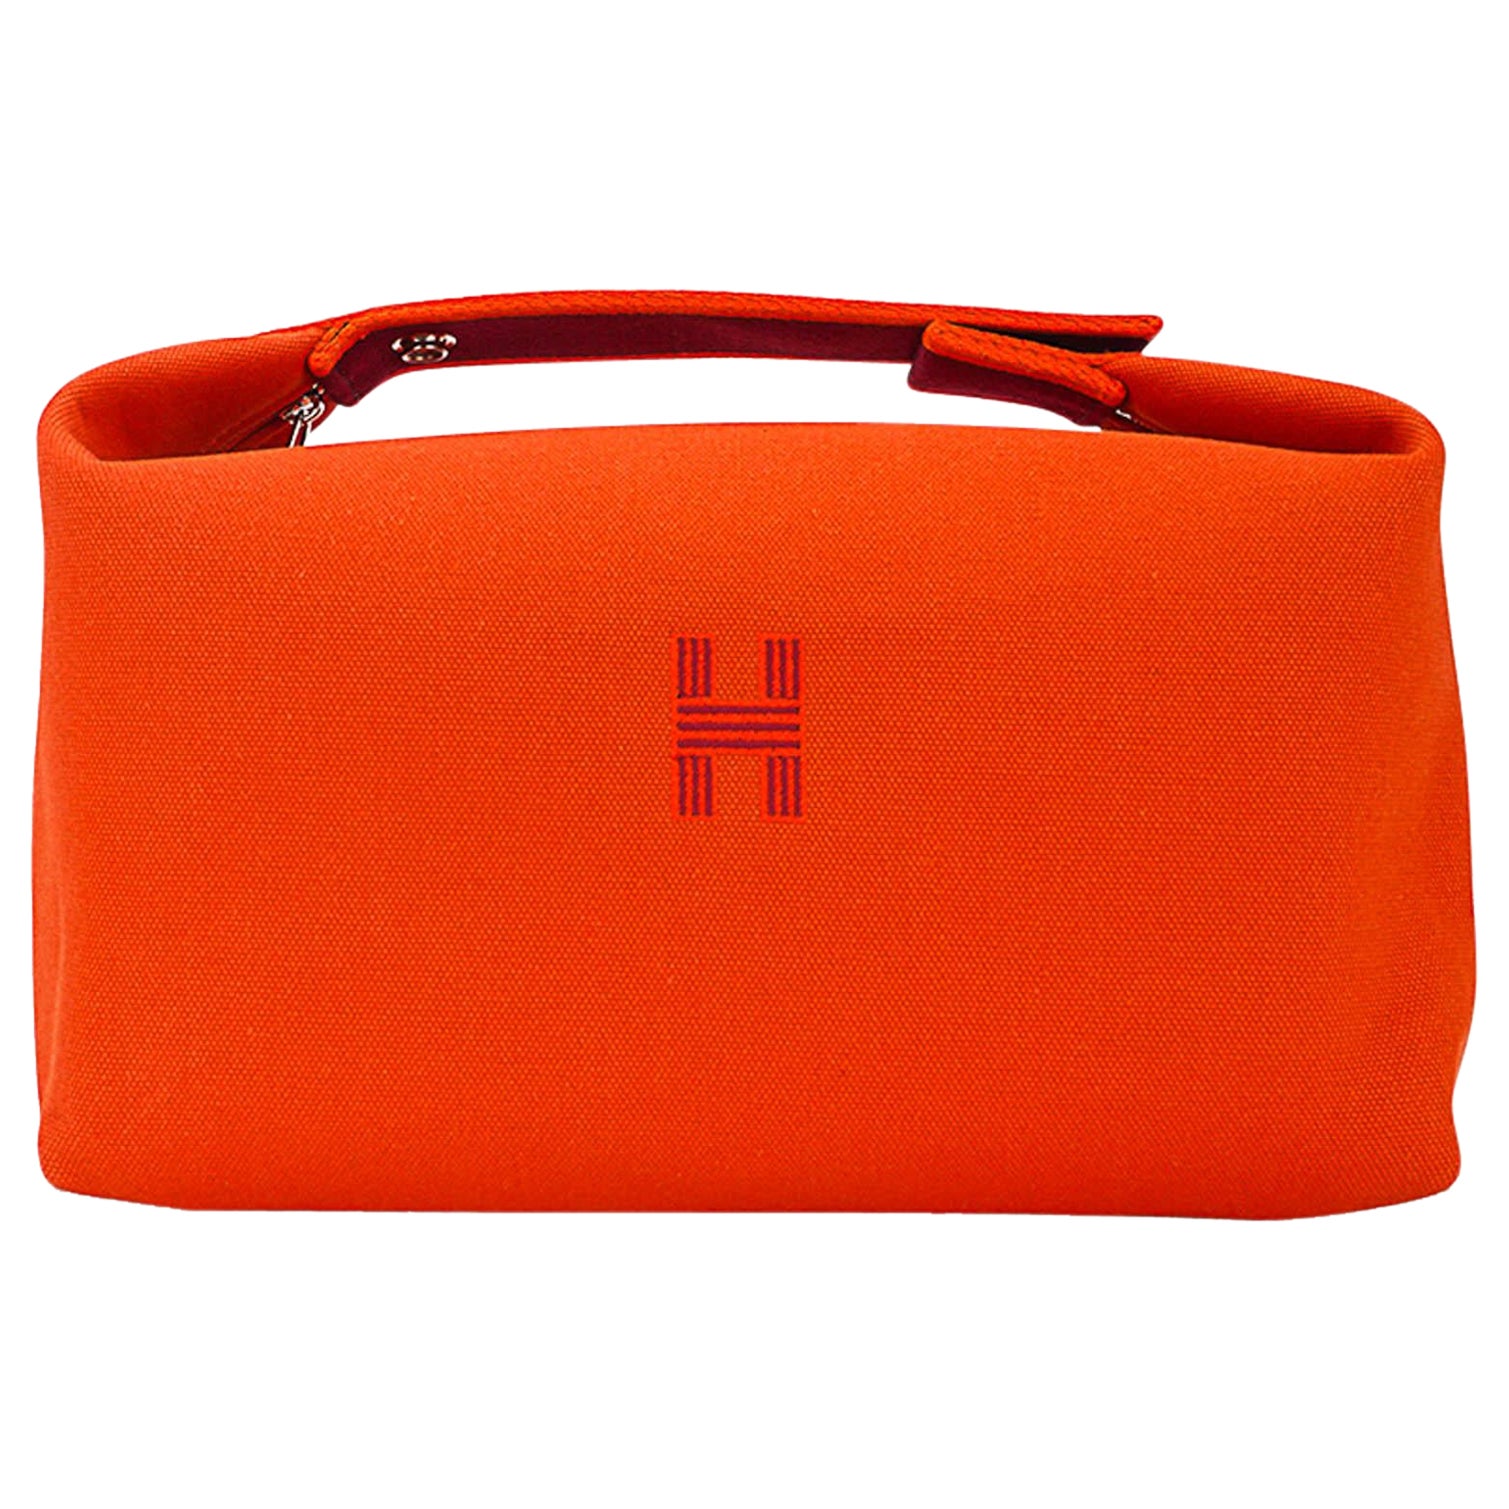 hermes Bride-a-Brac case，large model orange, Women's Fashion